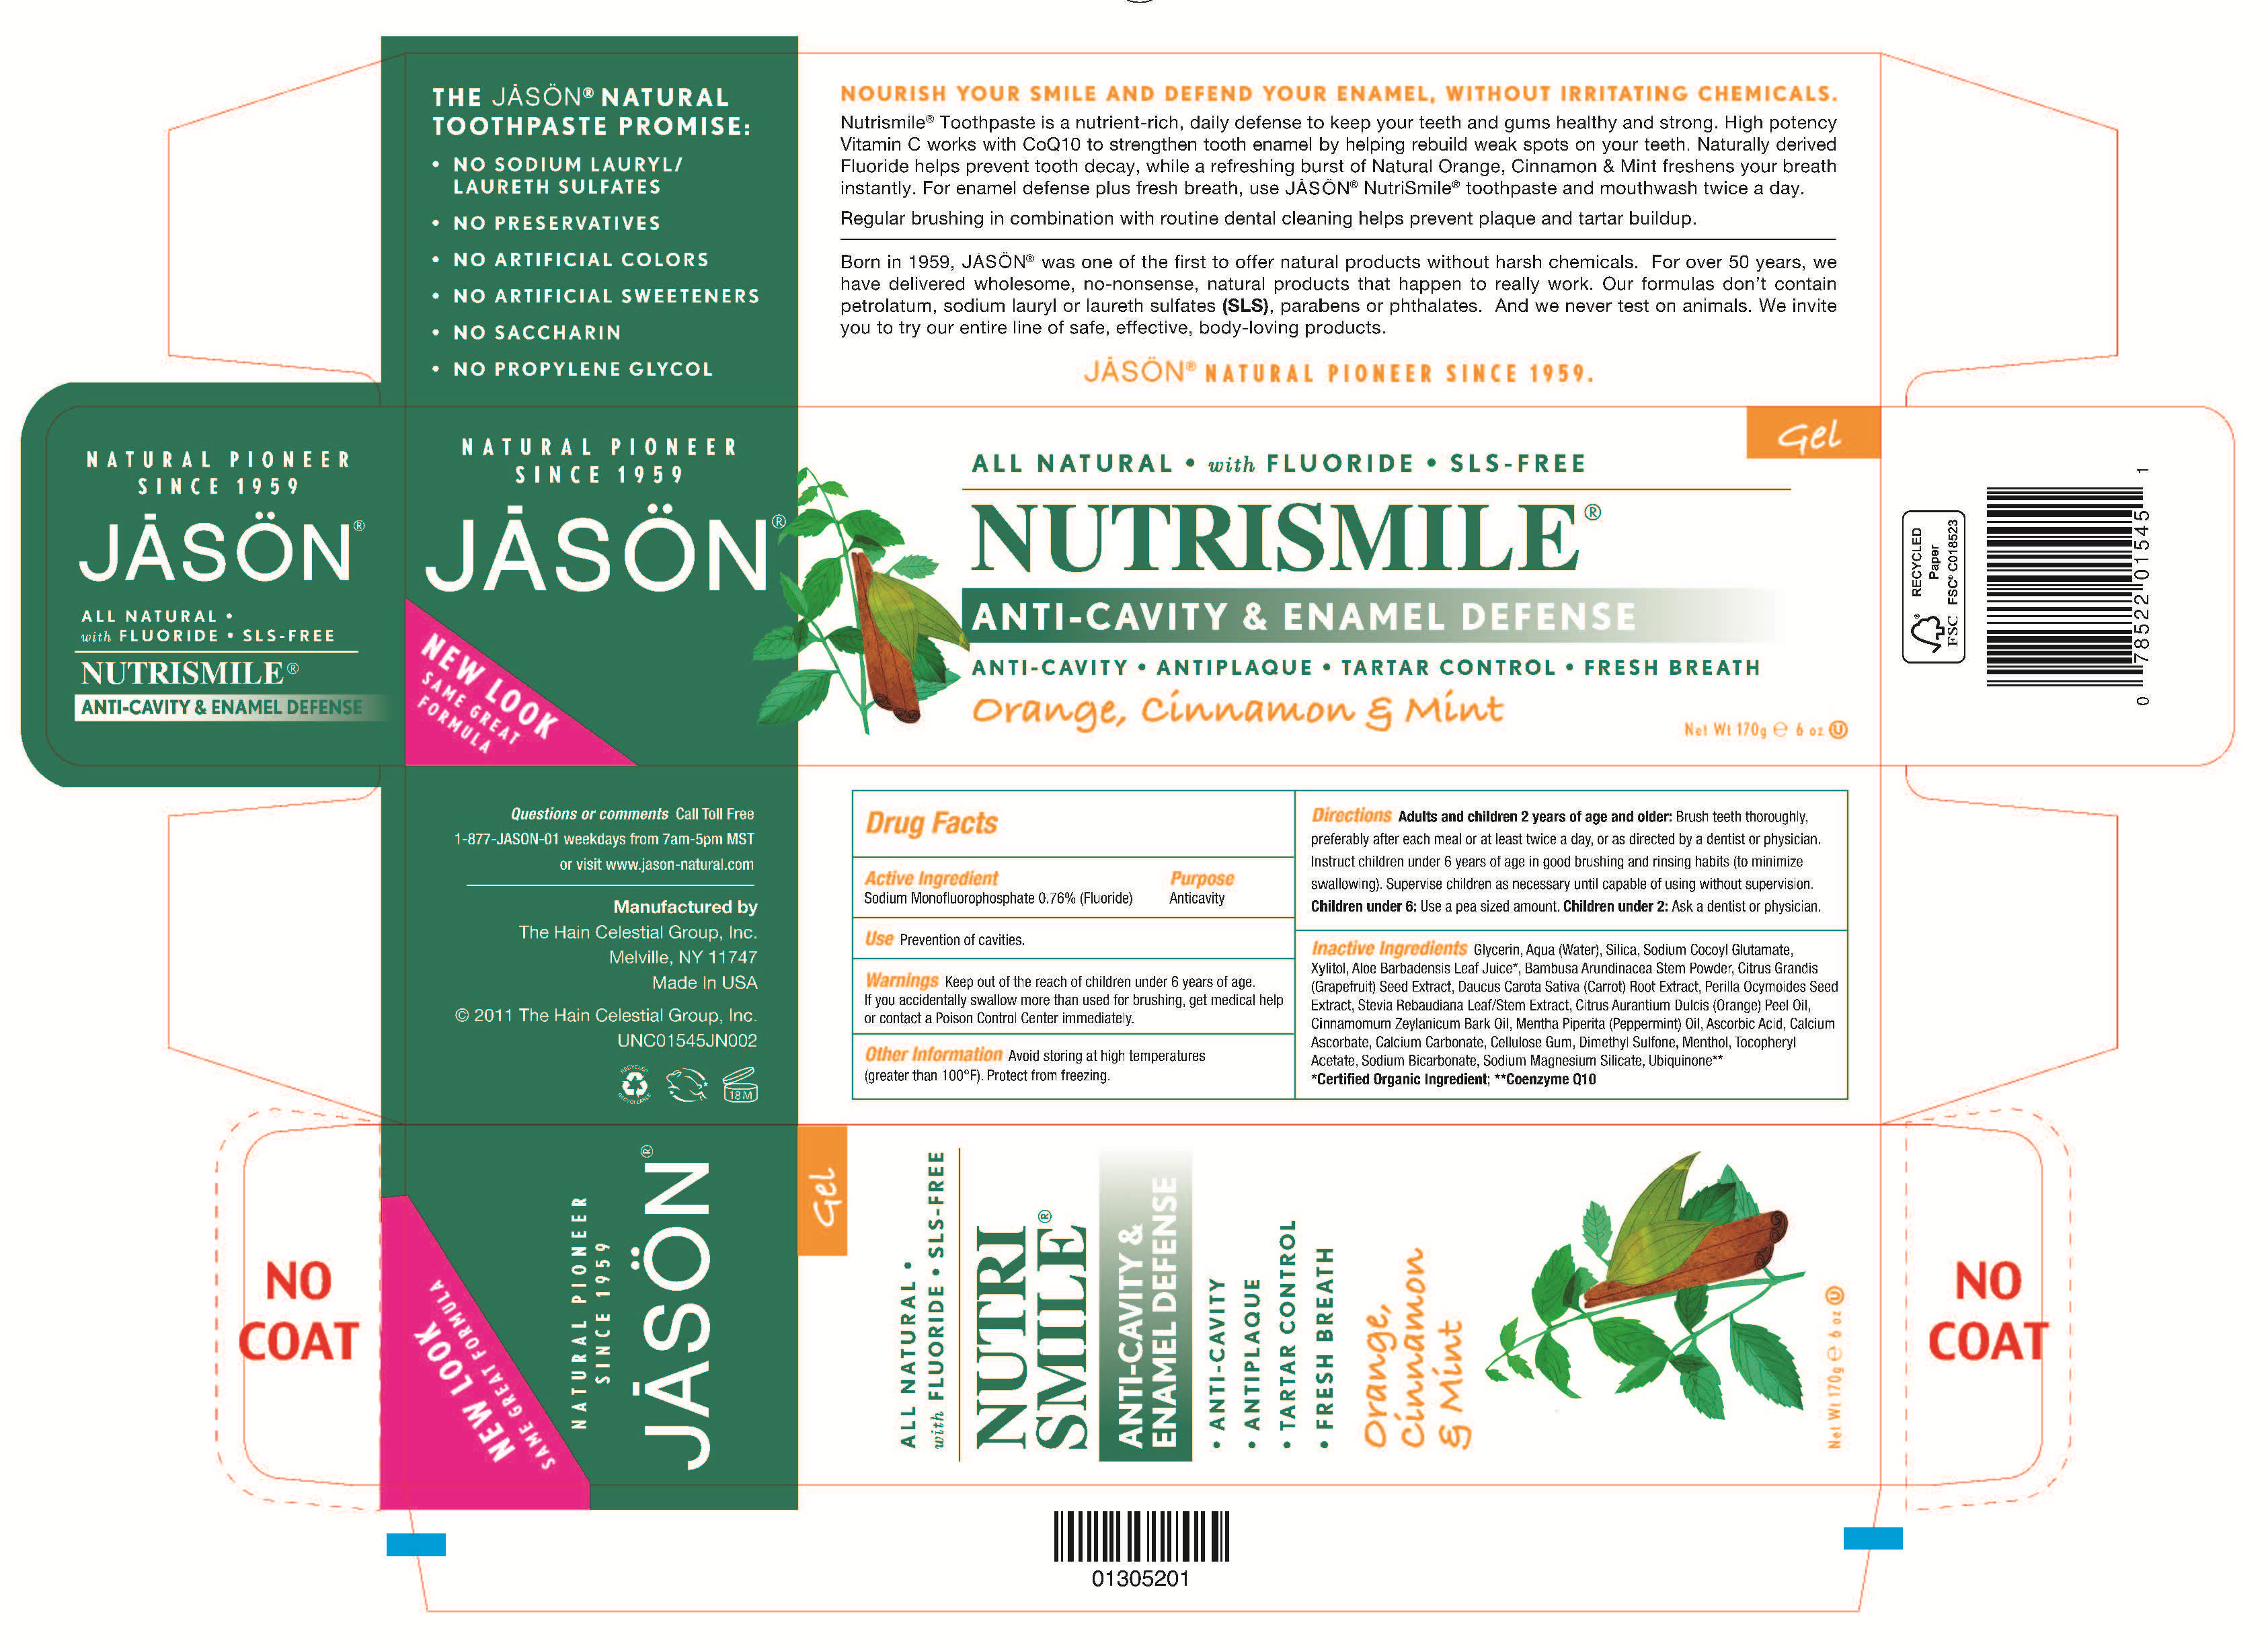 Jason Nutrismile Anticavity Orange Cinnamon Mint